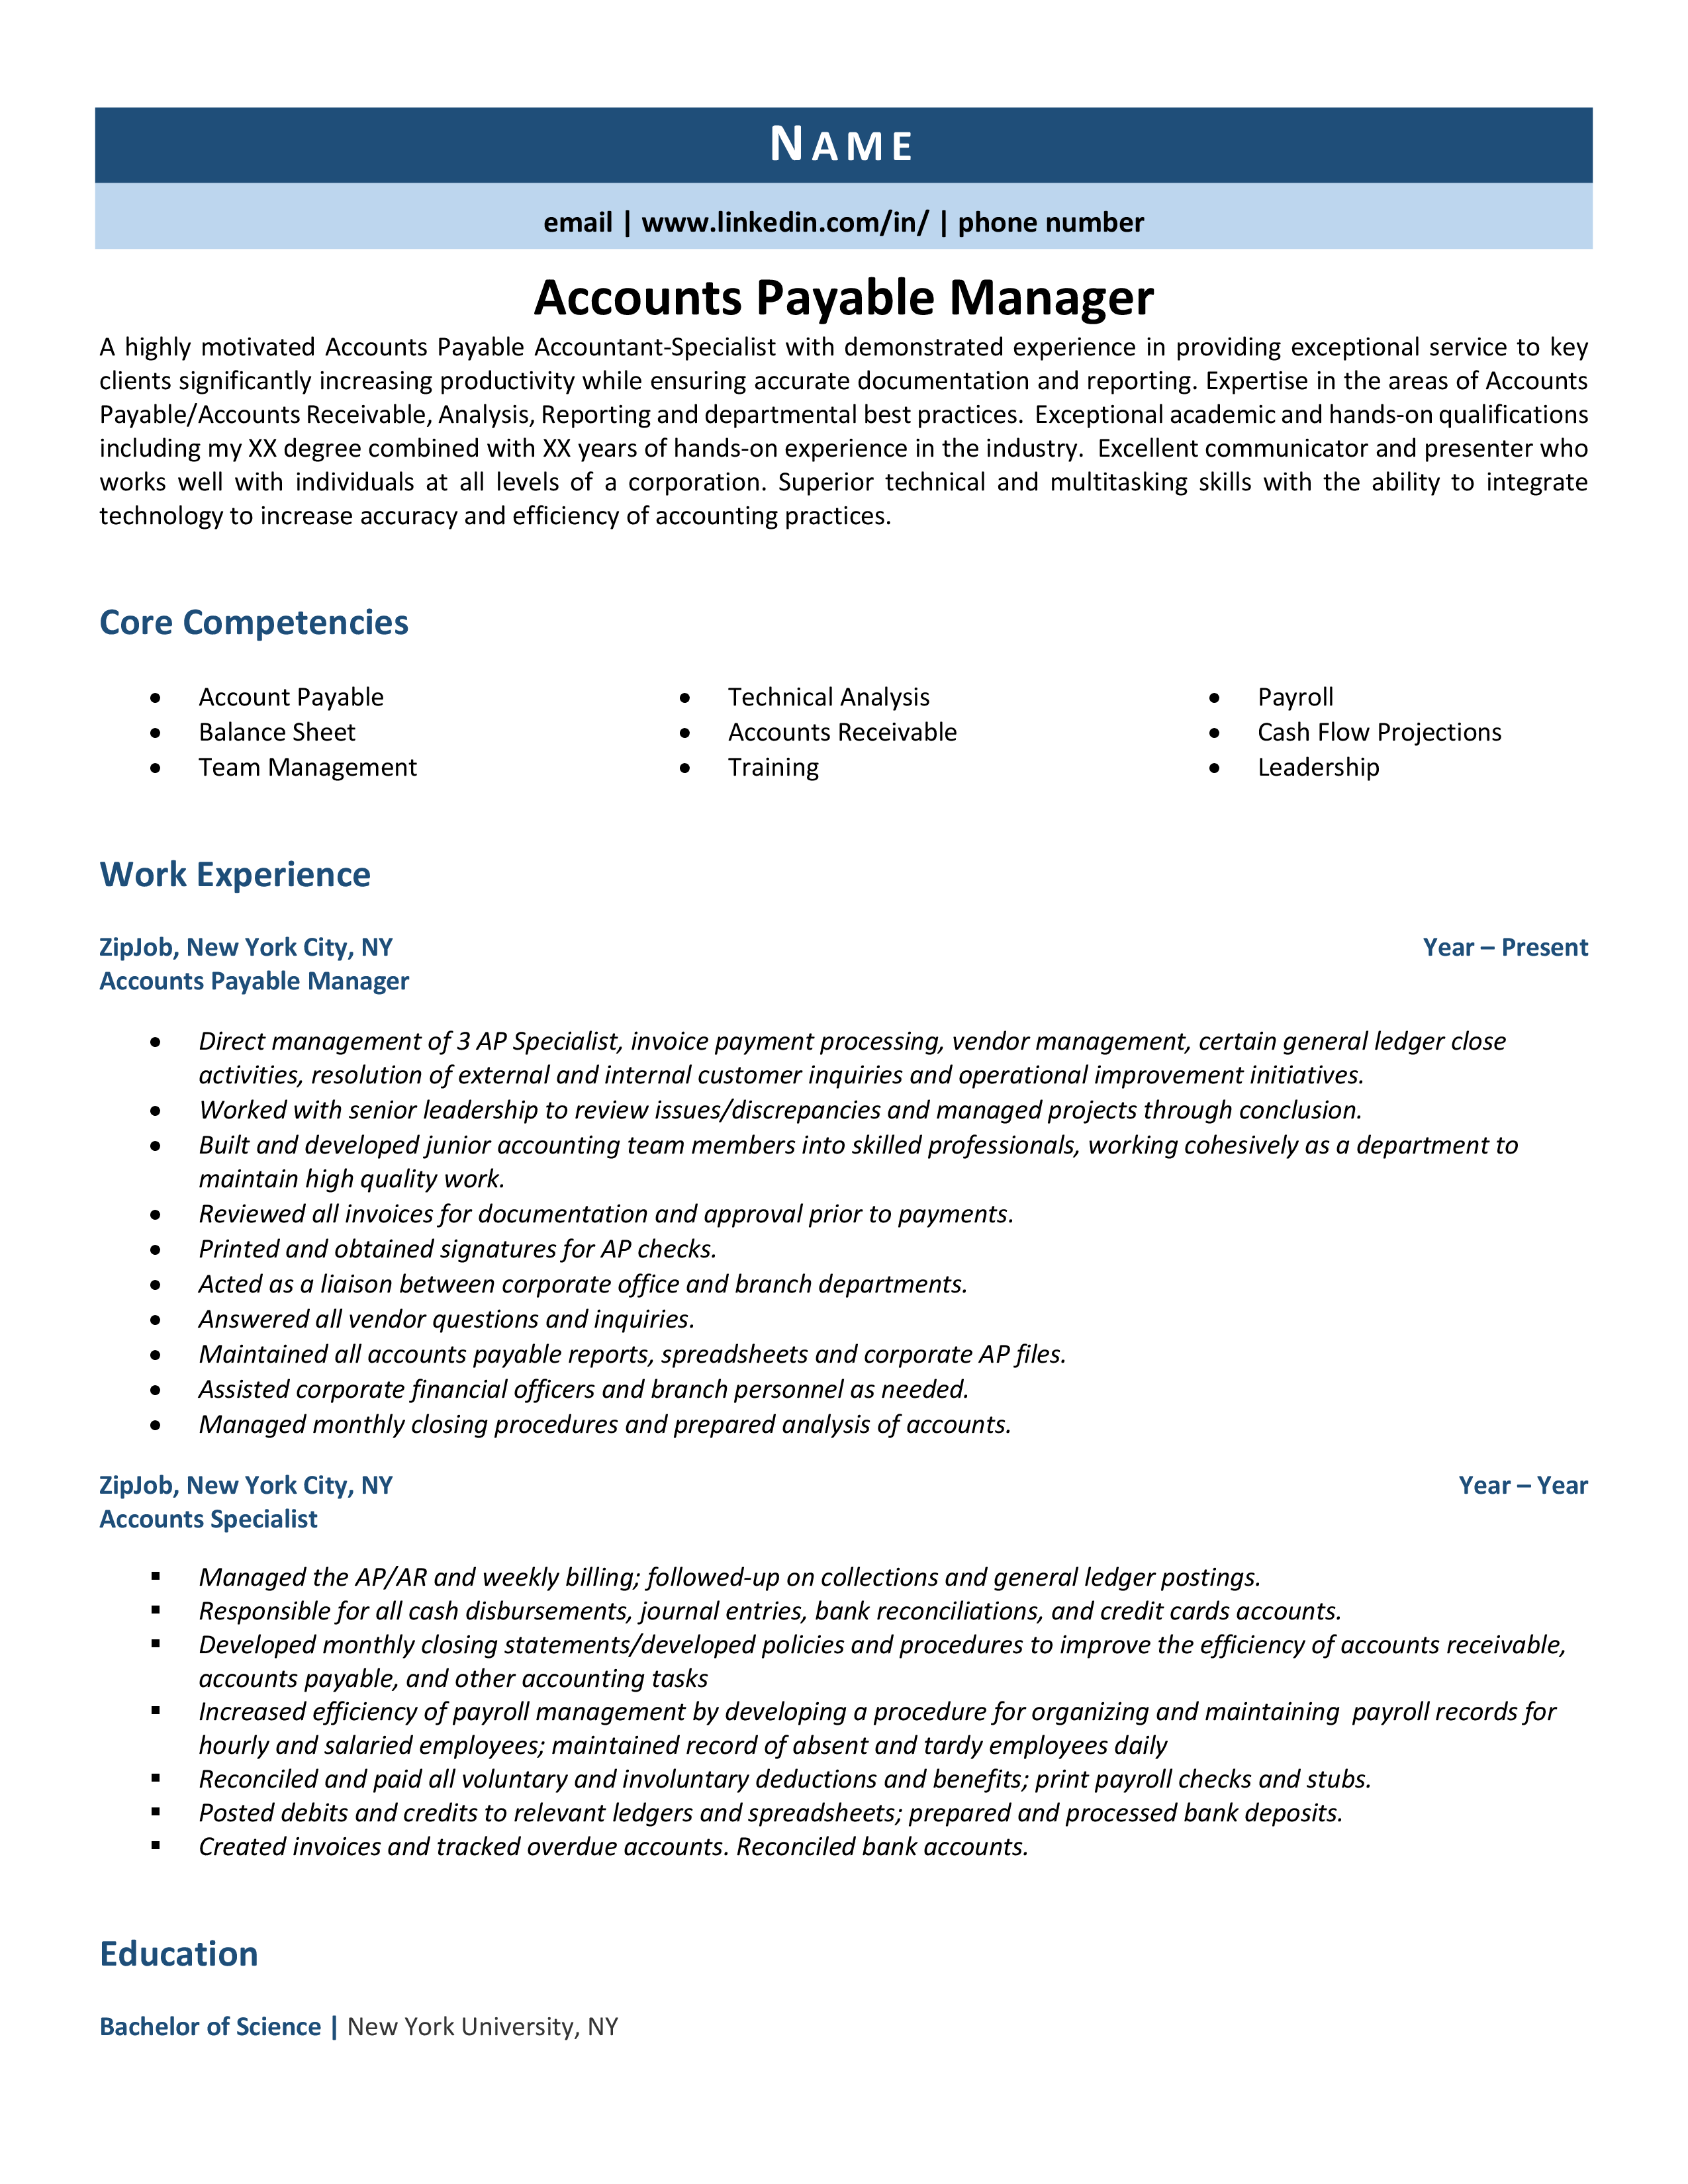 accounts payable helpdesk resume